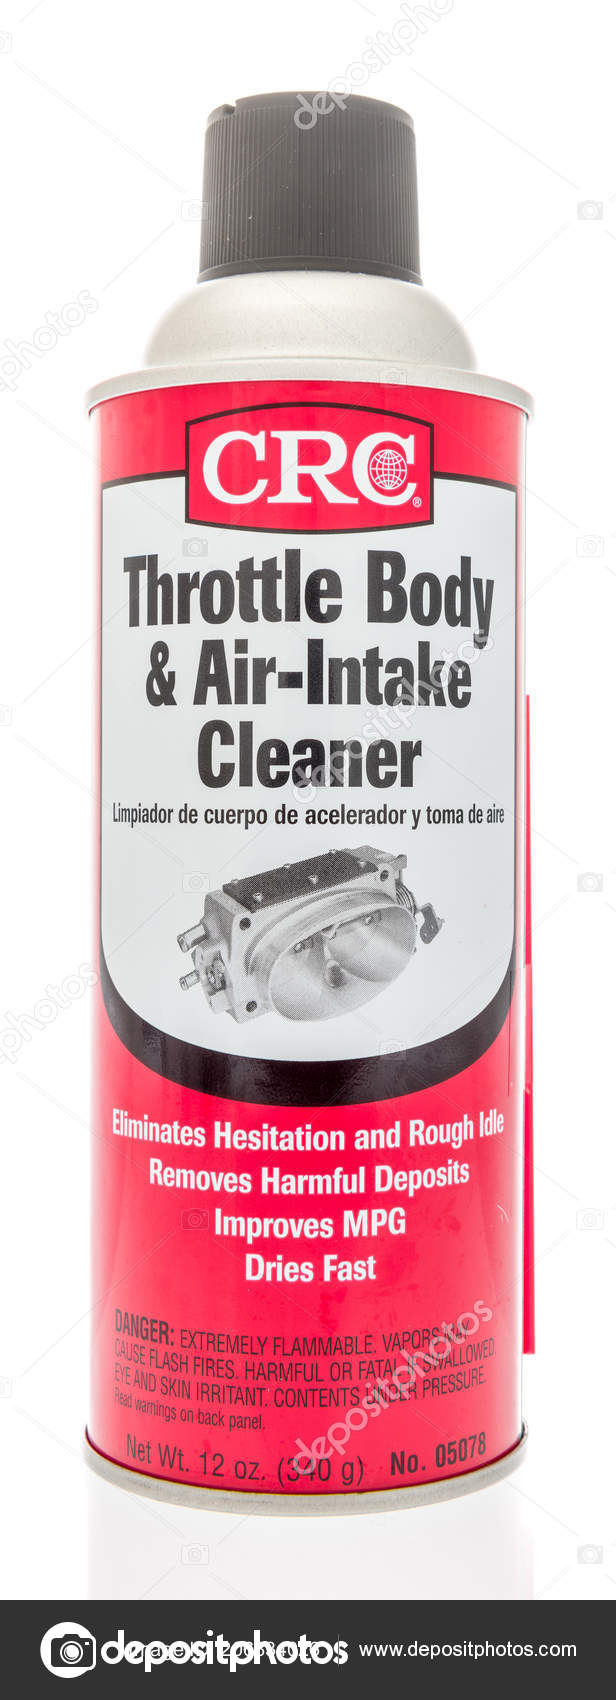 CRC Throttle Body & Air-Intake Cleaner, 12 Oz., 05078 